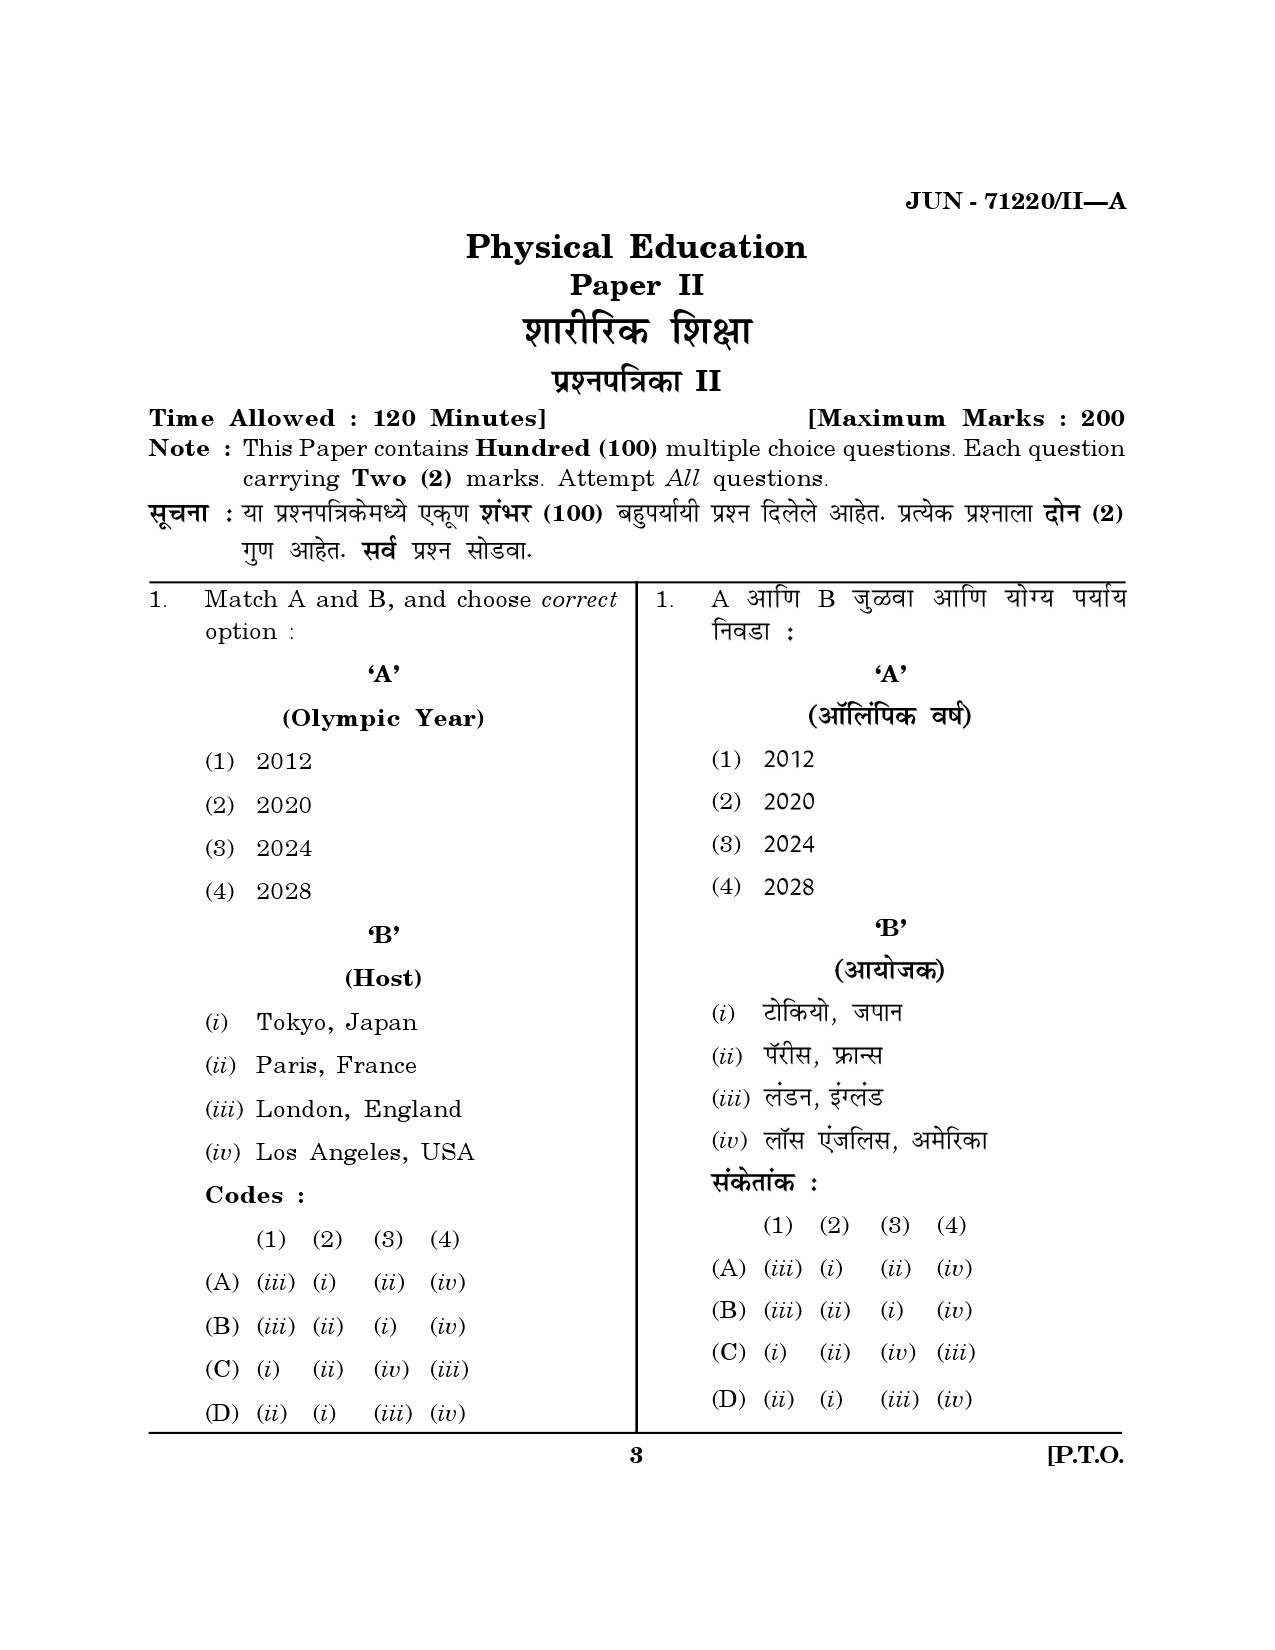 Maharashtra SET Physical Education Question Paper II June 2020 2